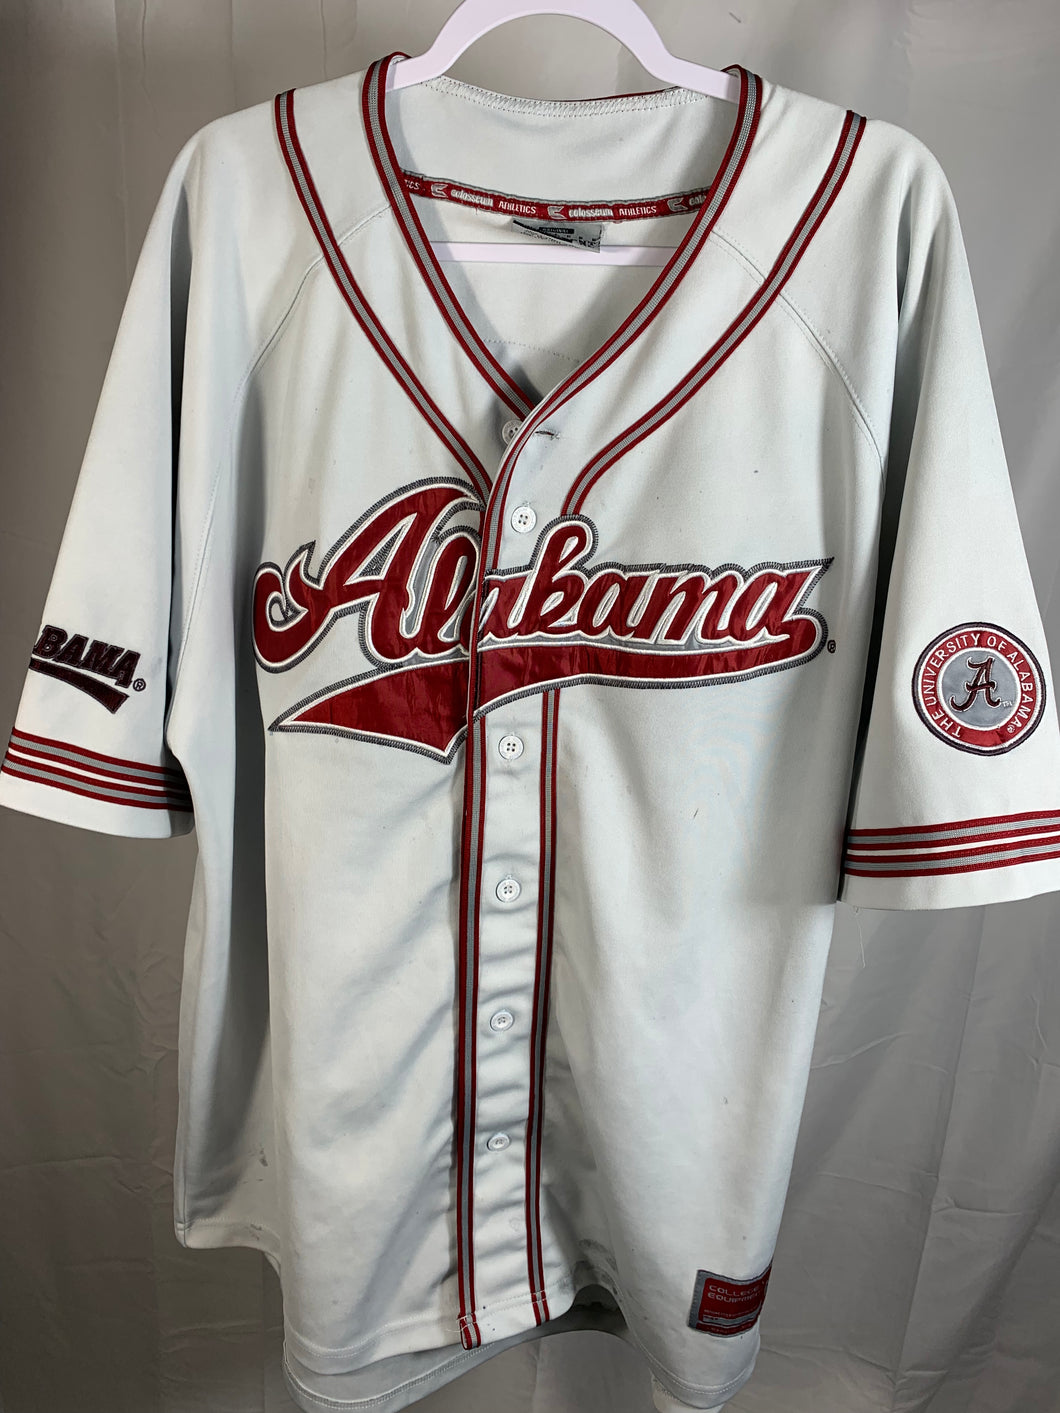 Alabama Baseball Jersey XL